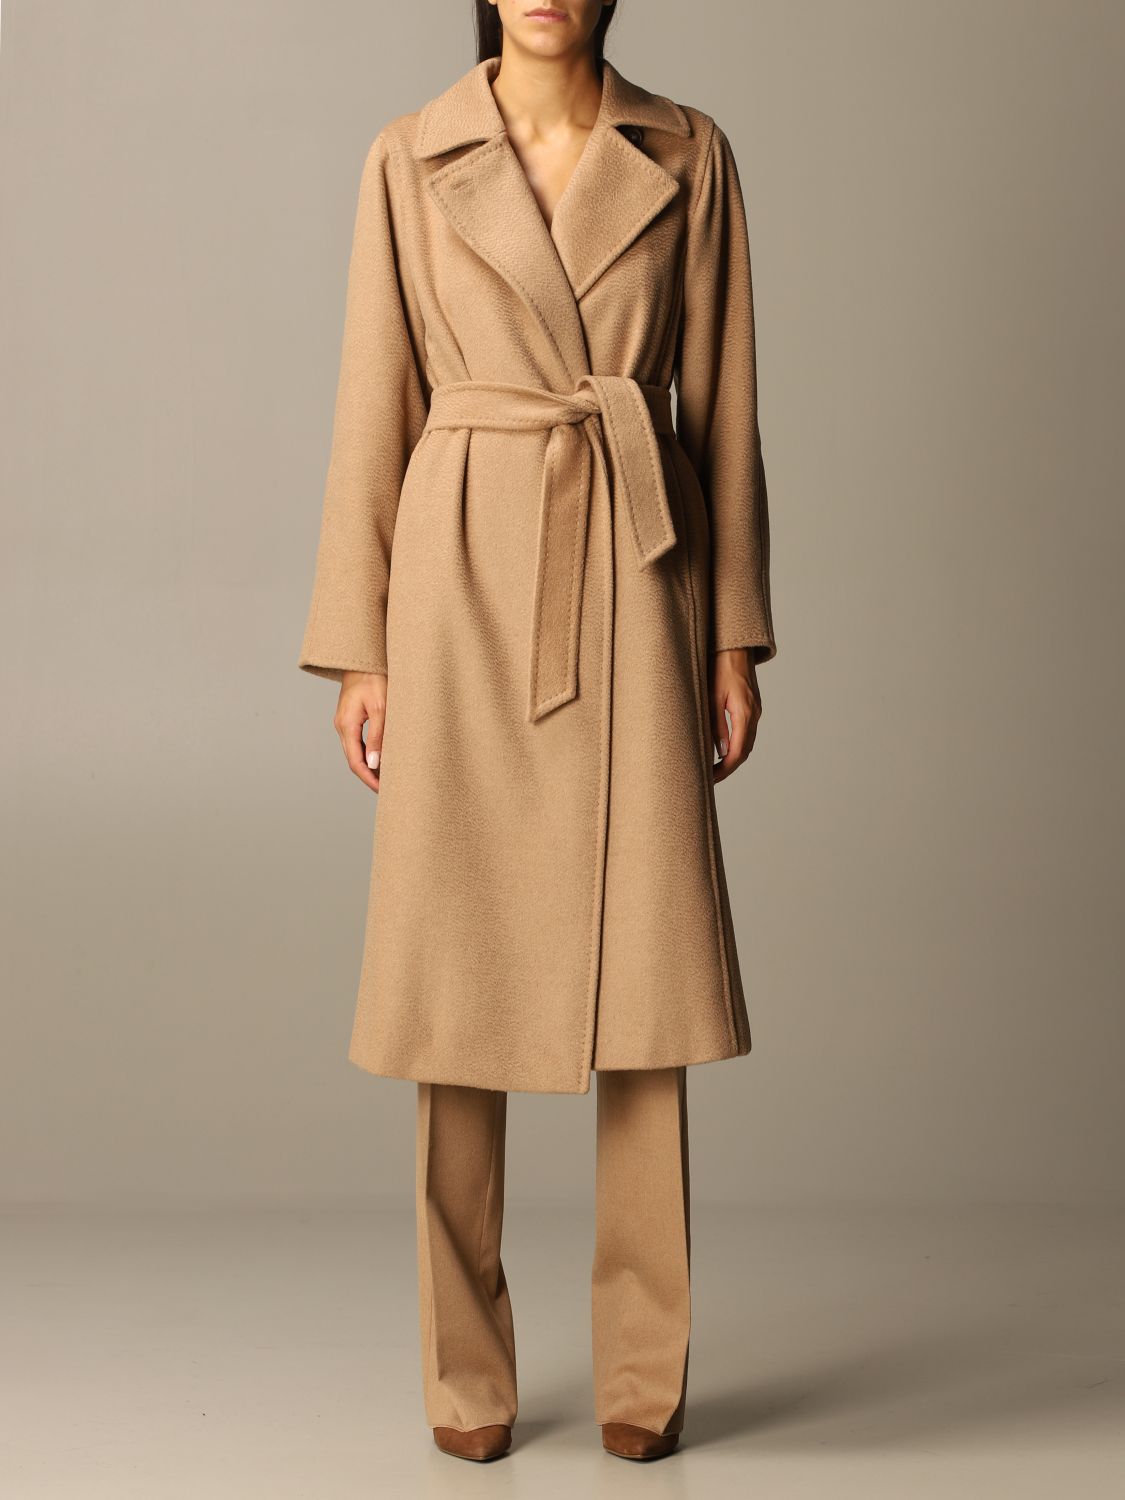 MAX MARA: Manuela wool coat | Coat Max Mara Women Camel | Coat Max Mara